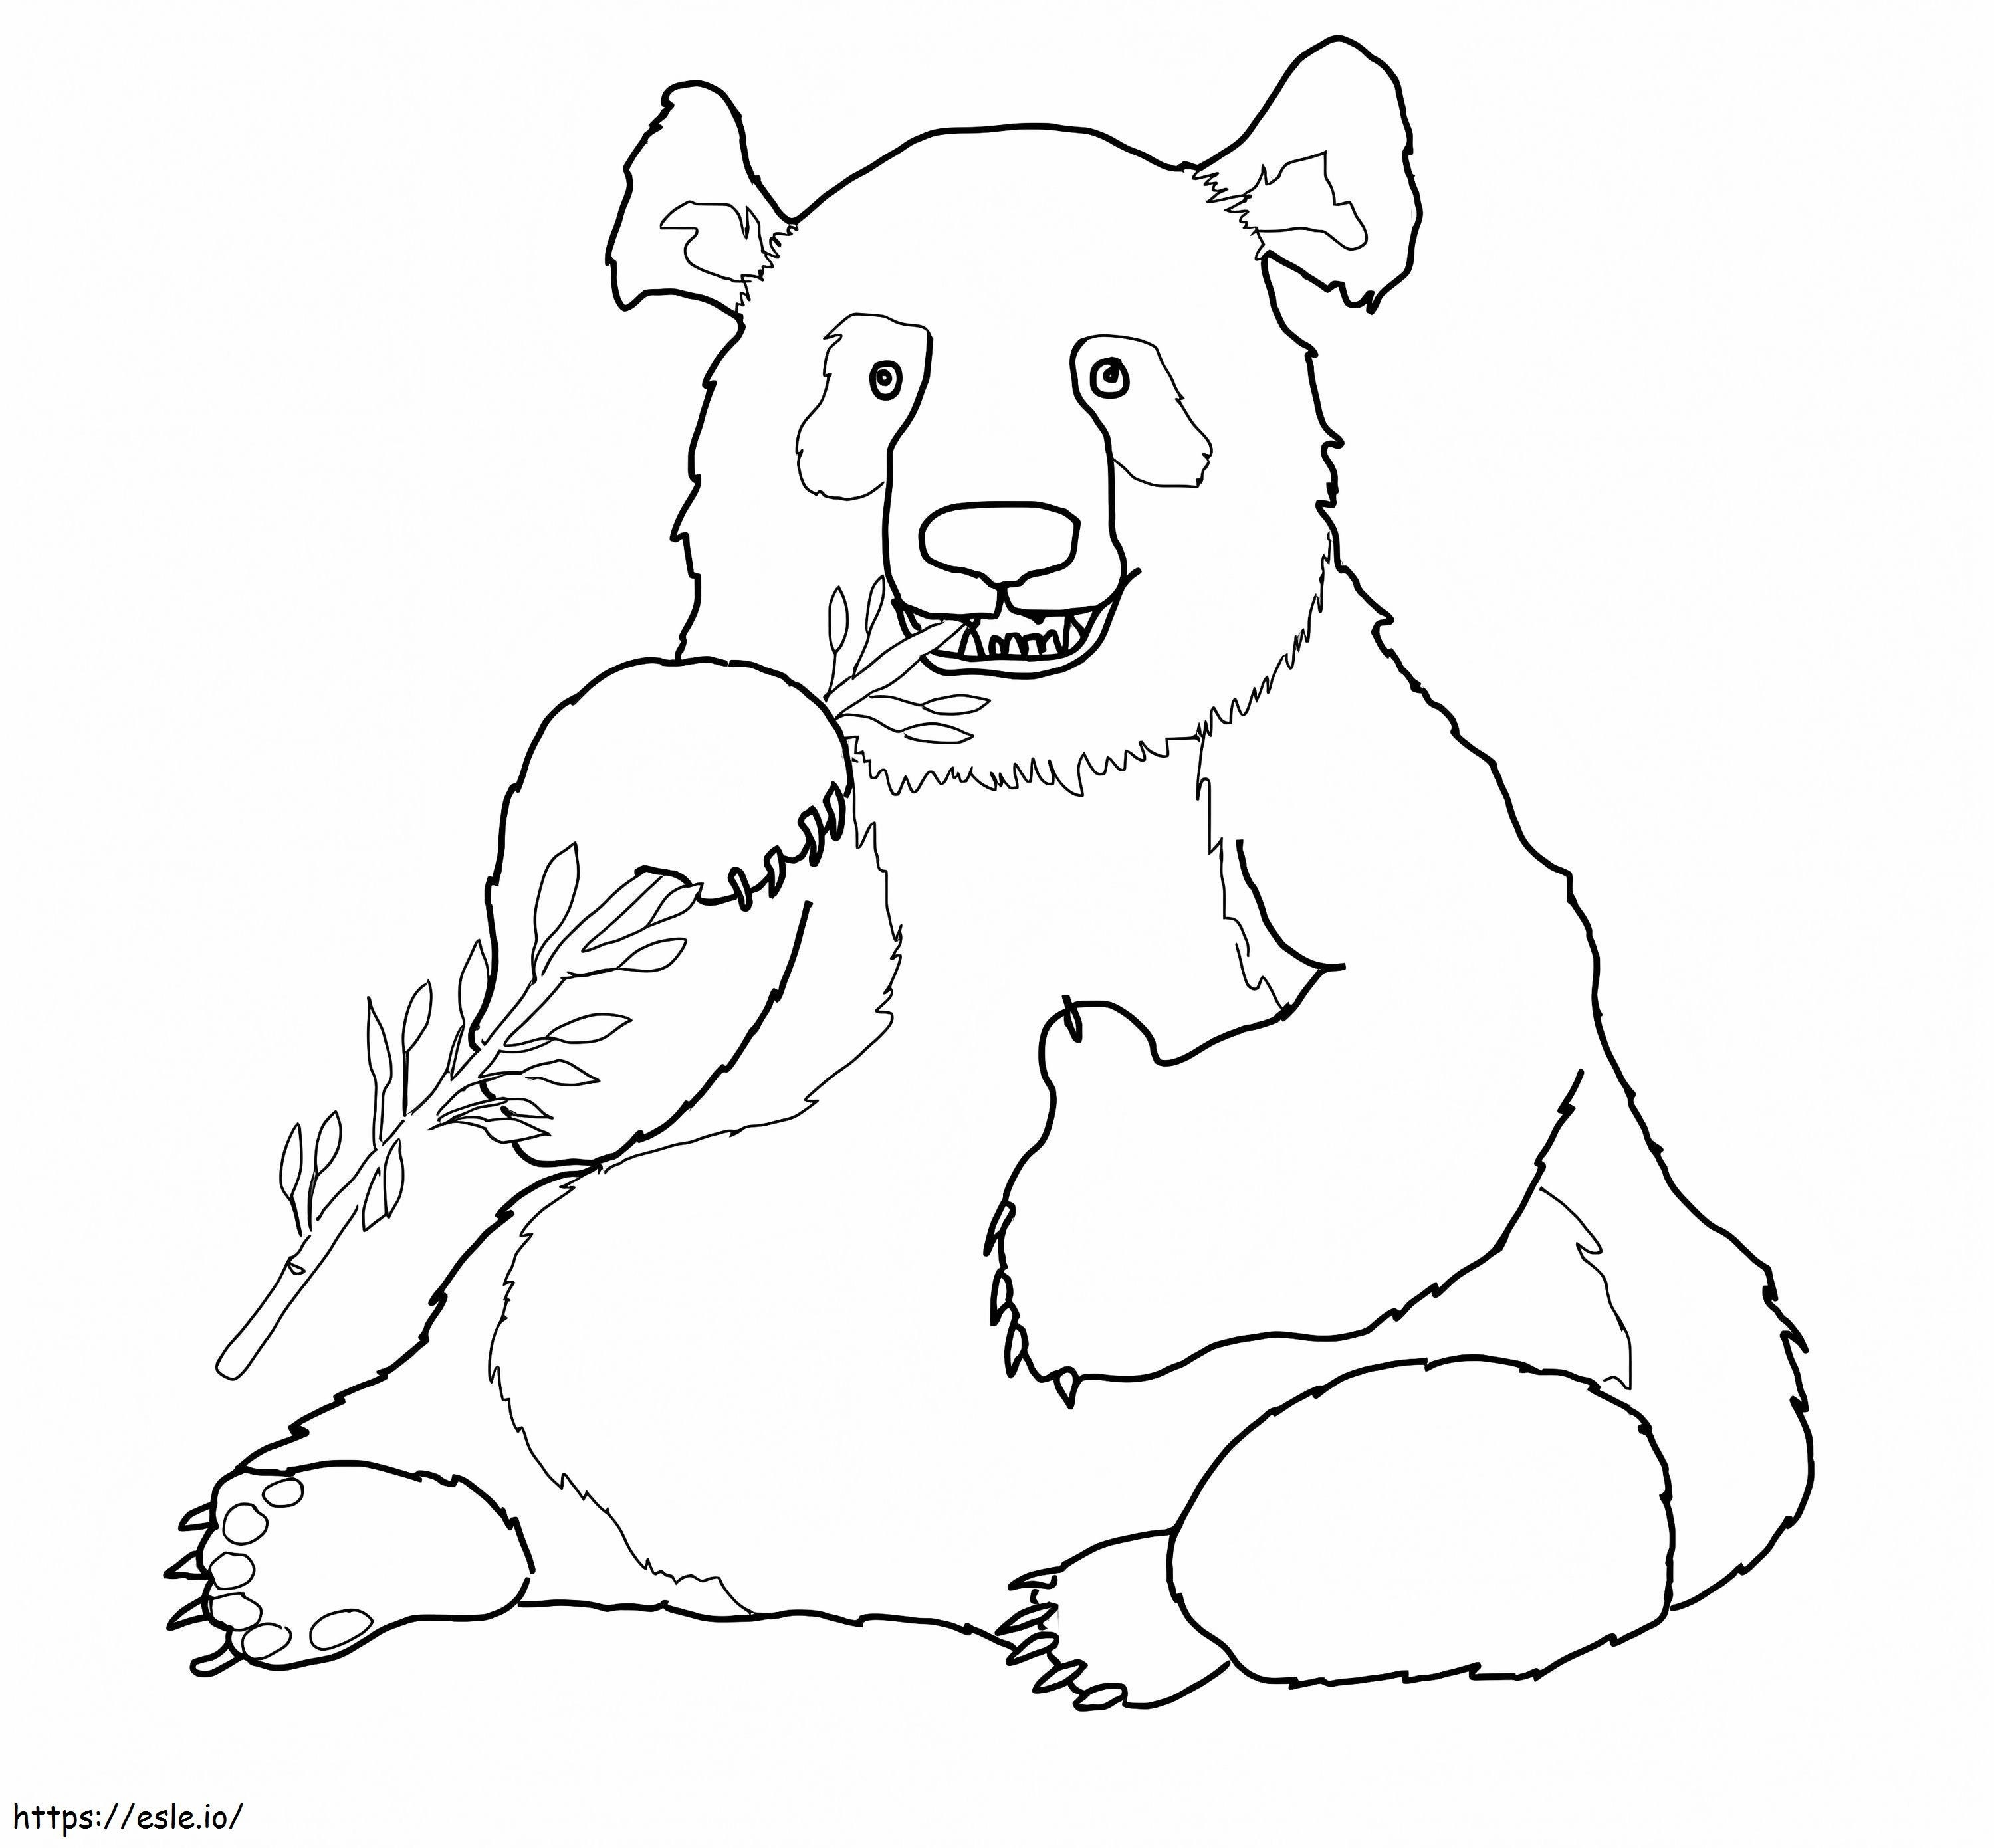 Funny Panda coloring page